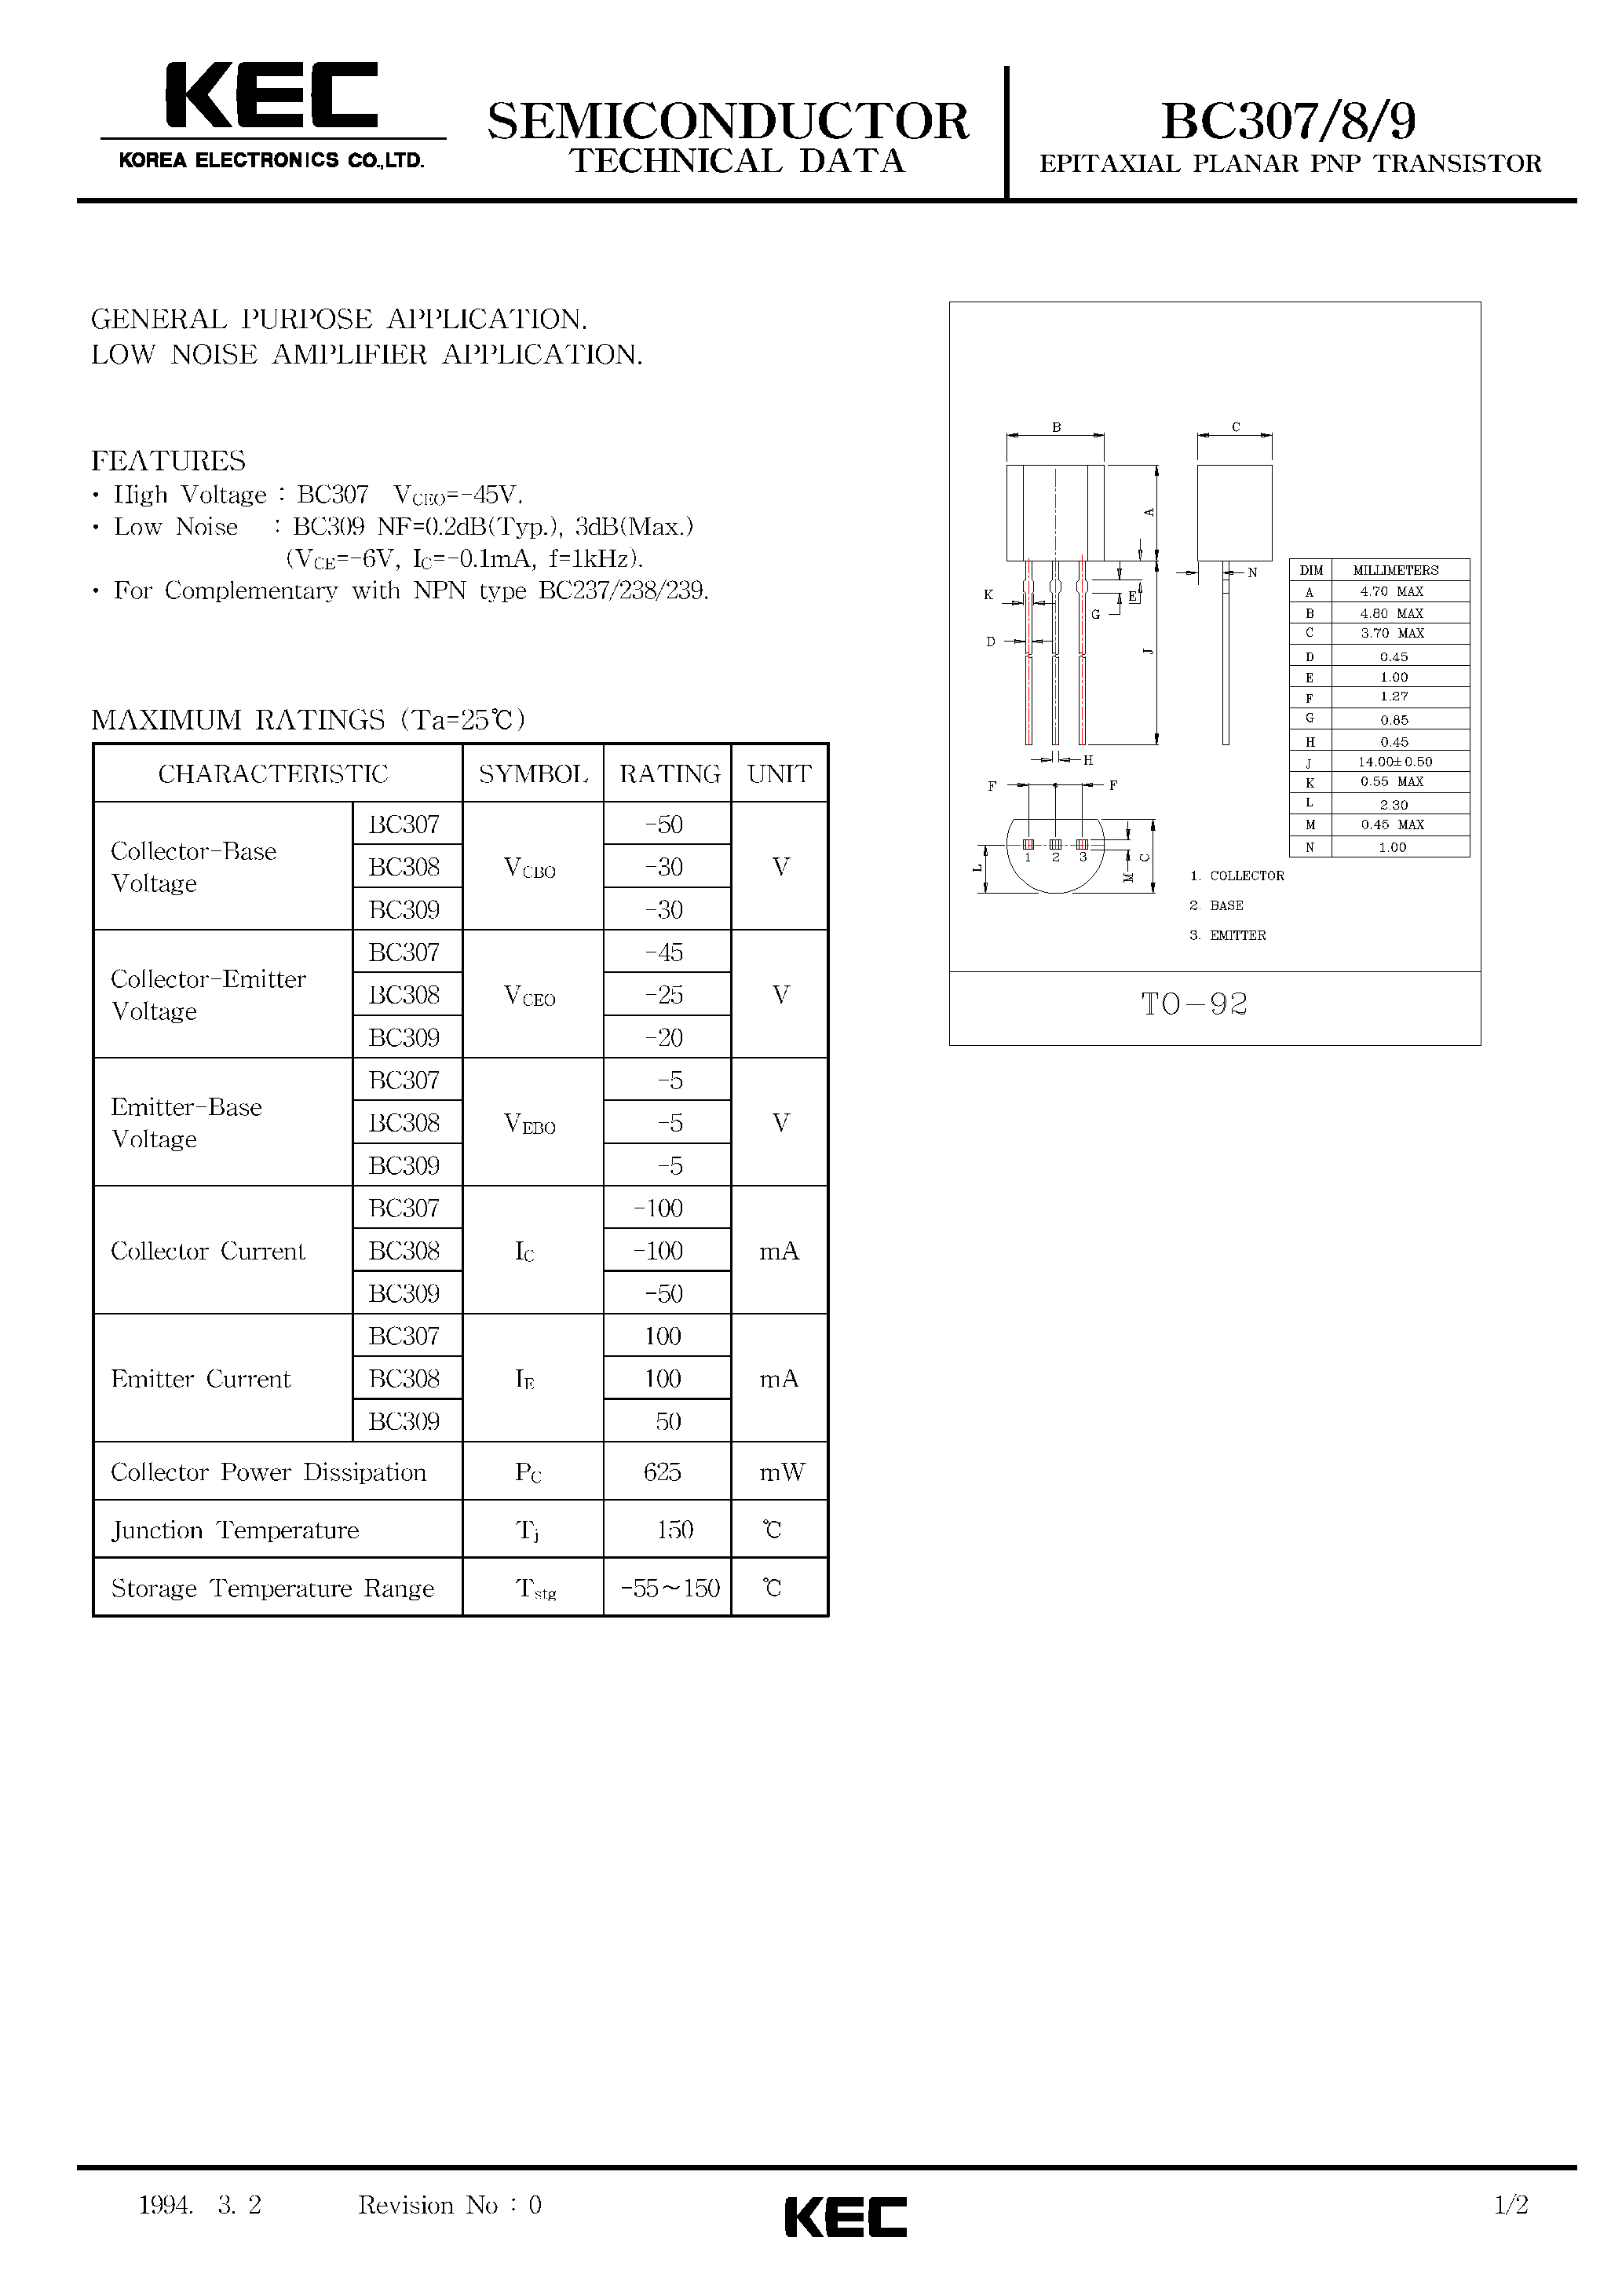 Datasheet BC308 - PNP SILICON PLANAR EPITAXIAL TRANSISTOR page 1